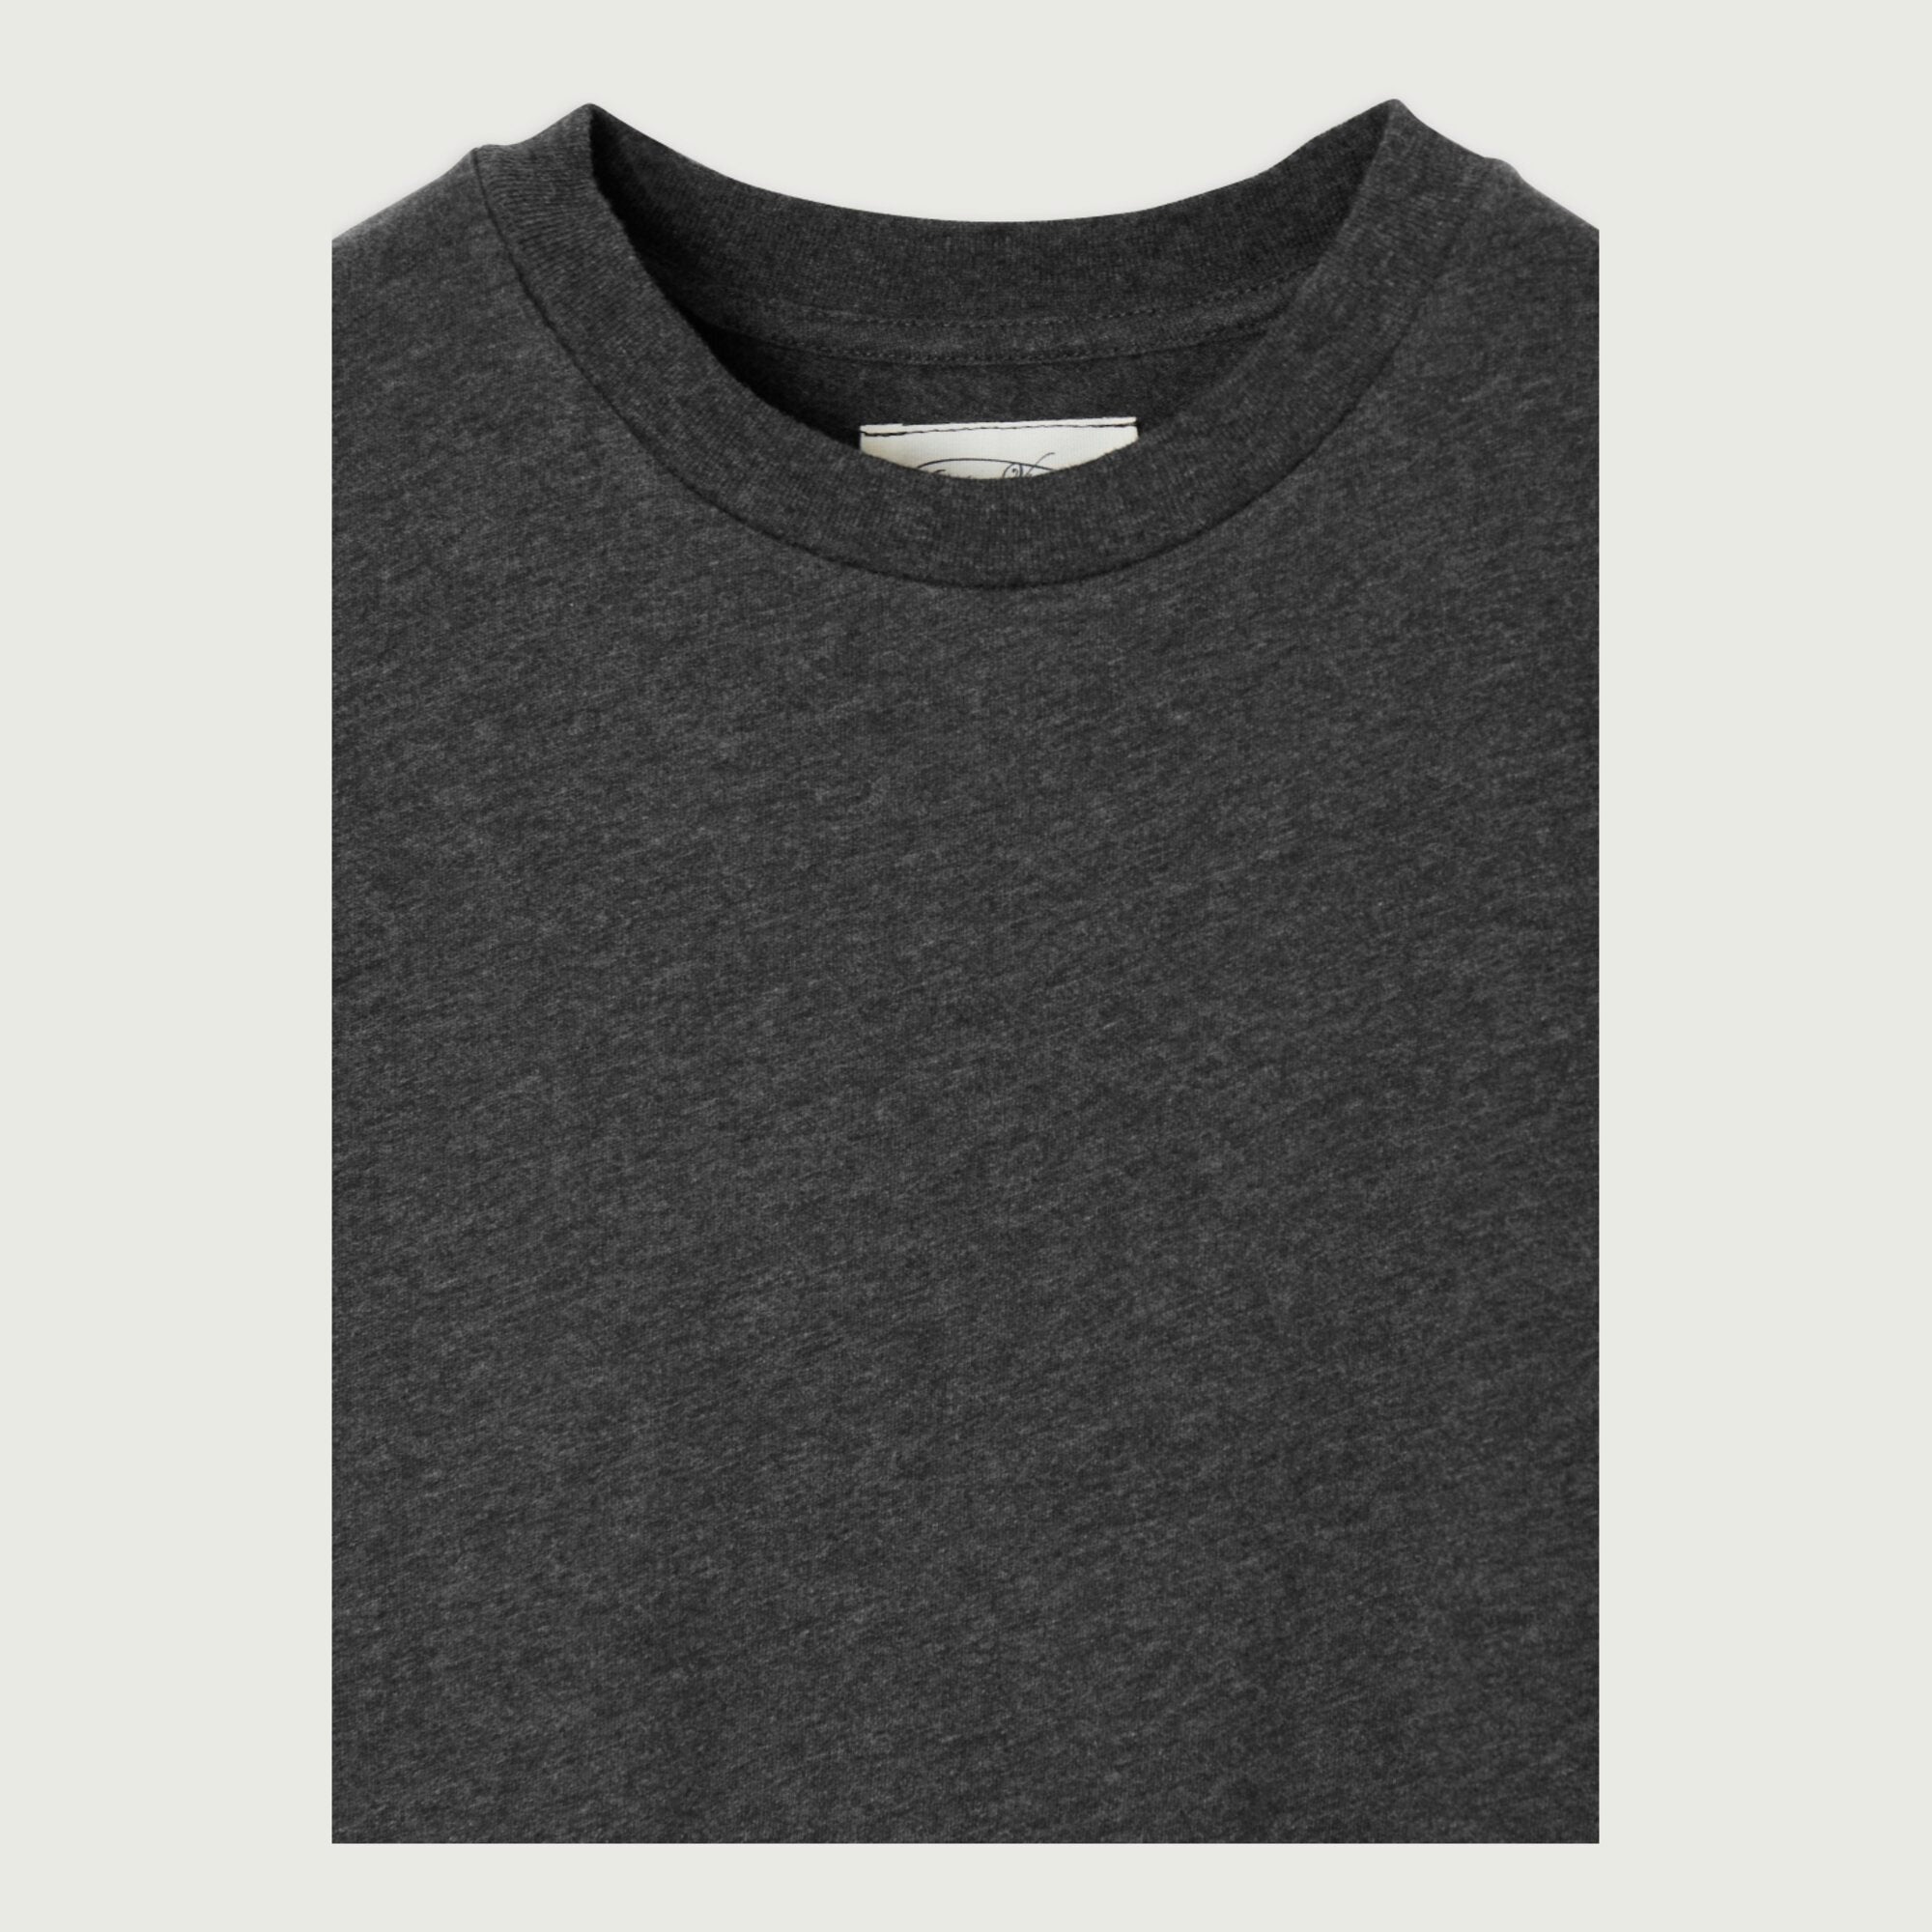 Boys & Girls Dark Grey Cotton T-Shirt